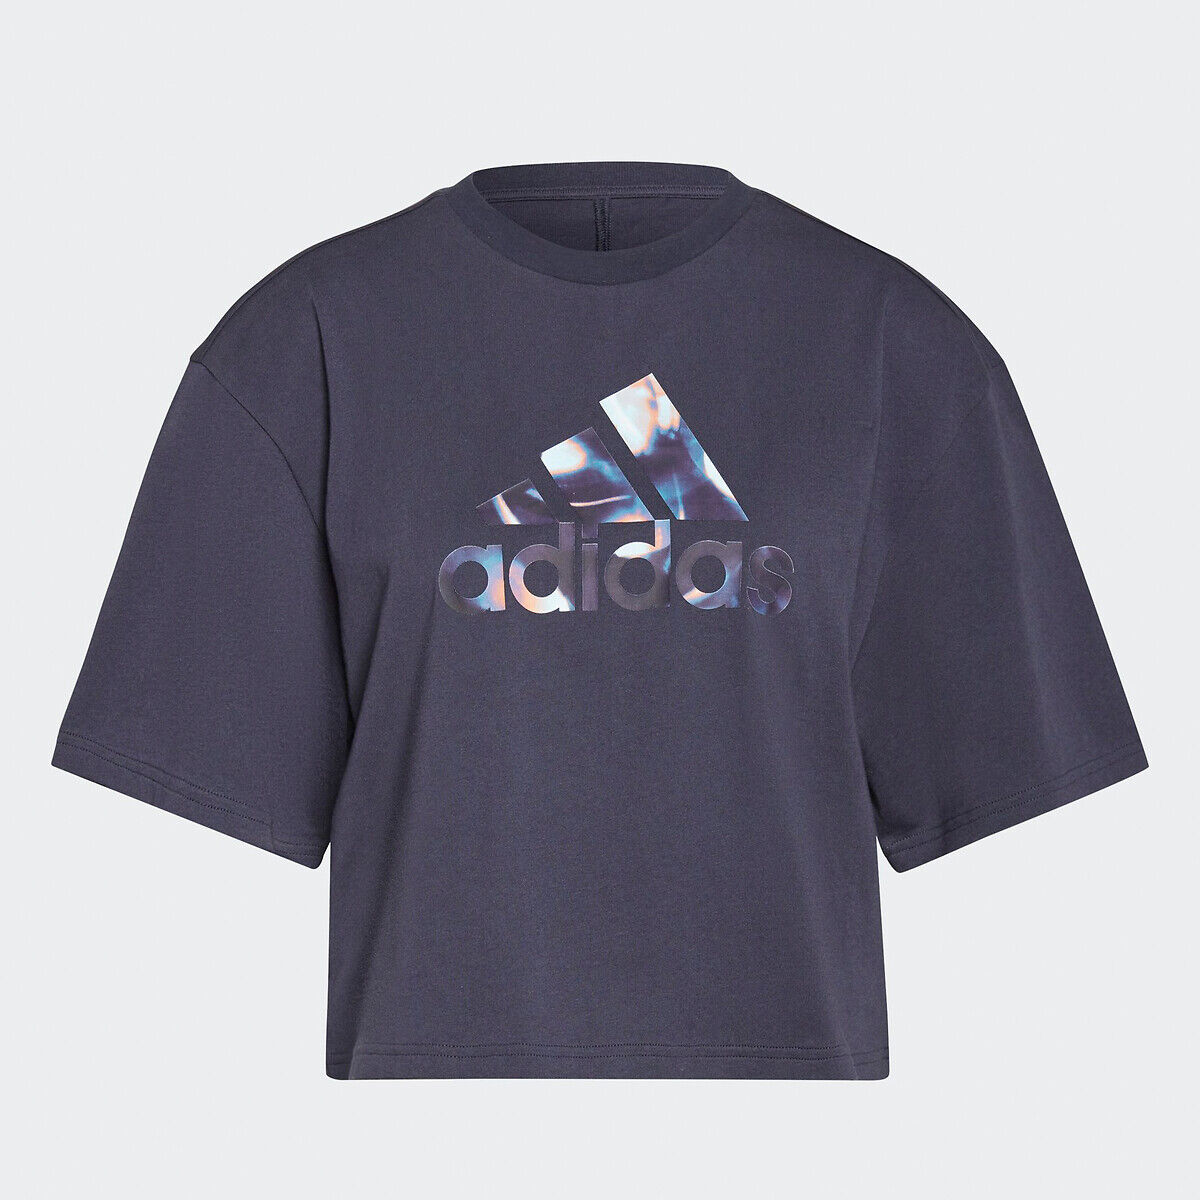 Adidas Performance T-shirt curta, motivo à frente   Azul-Escuro